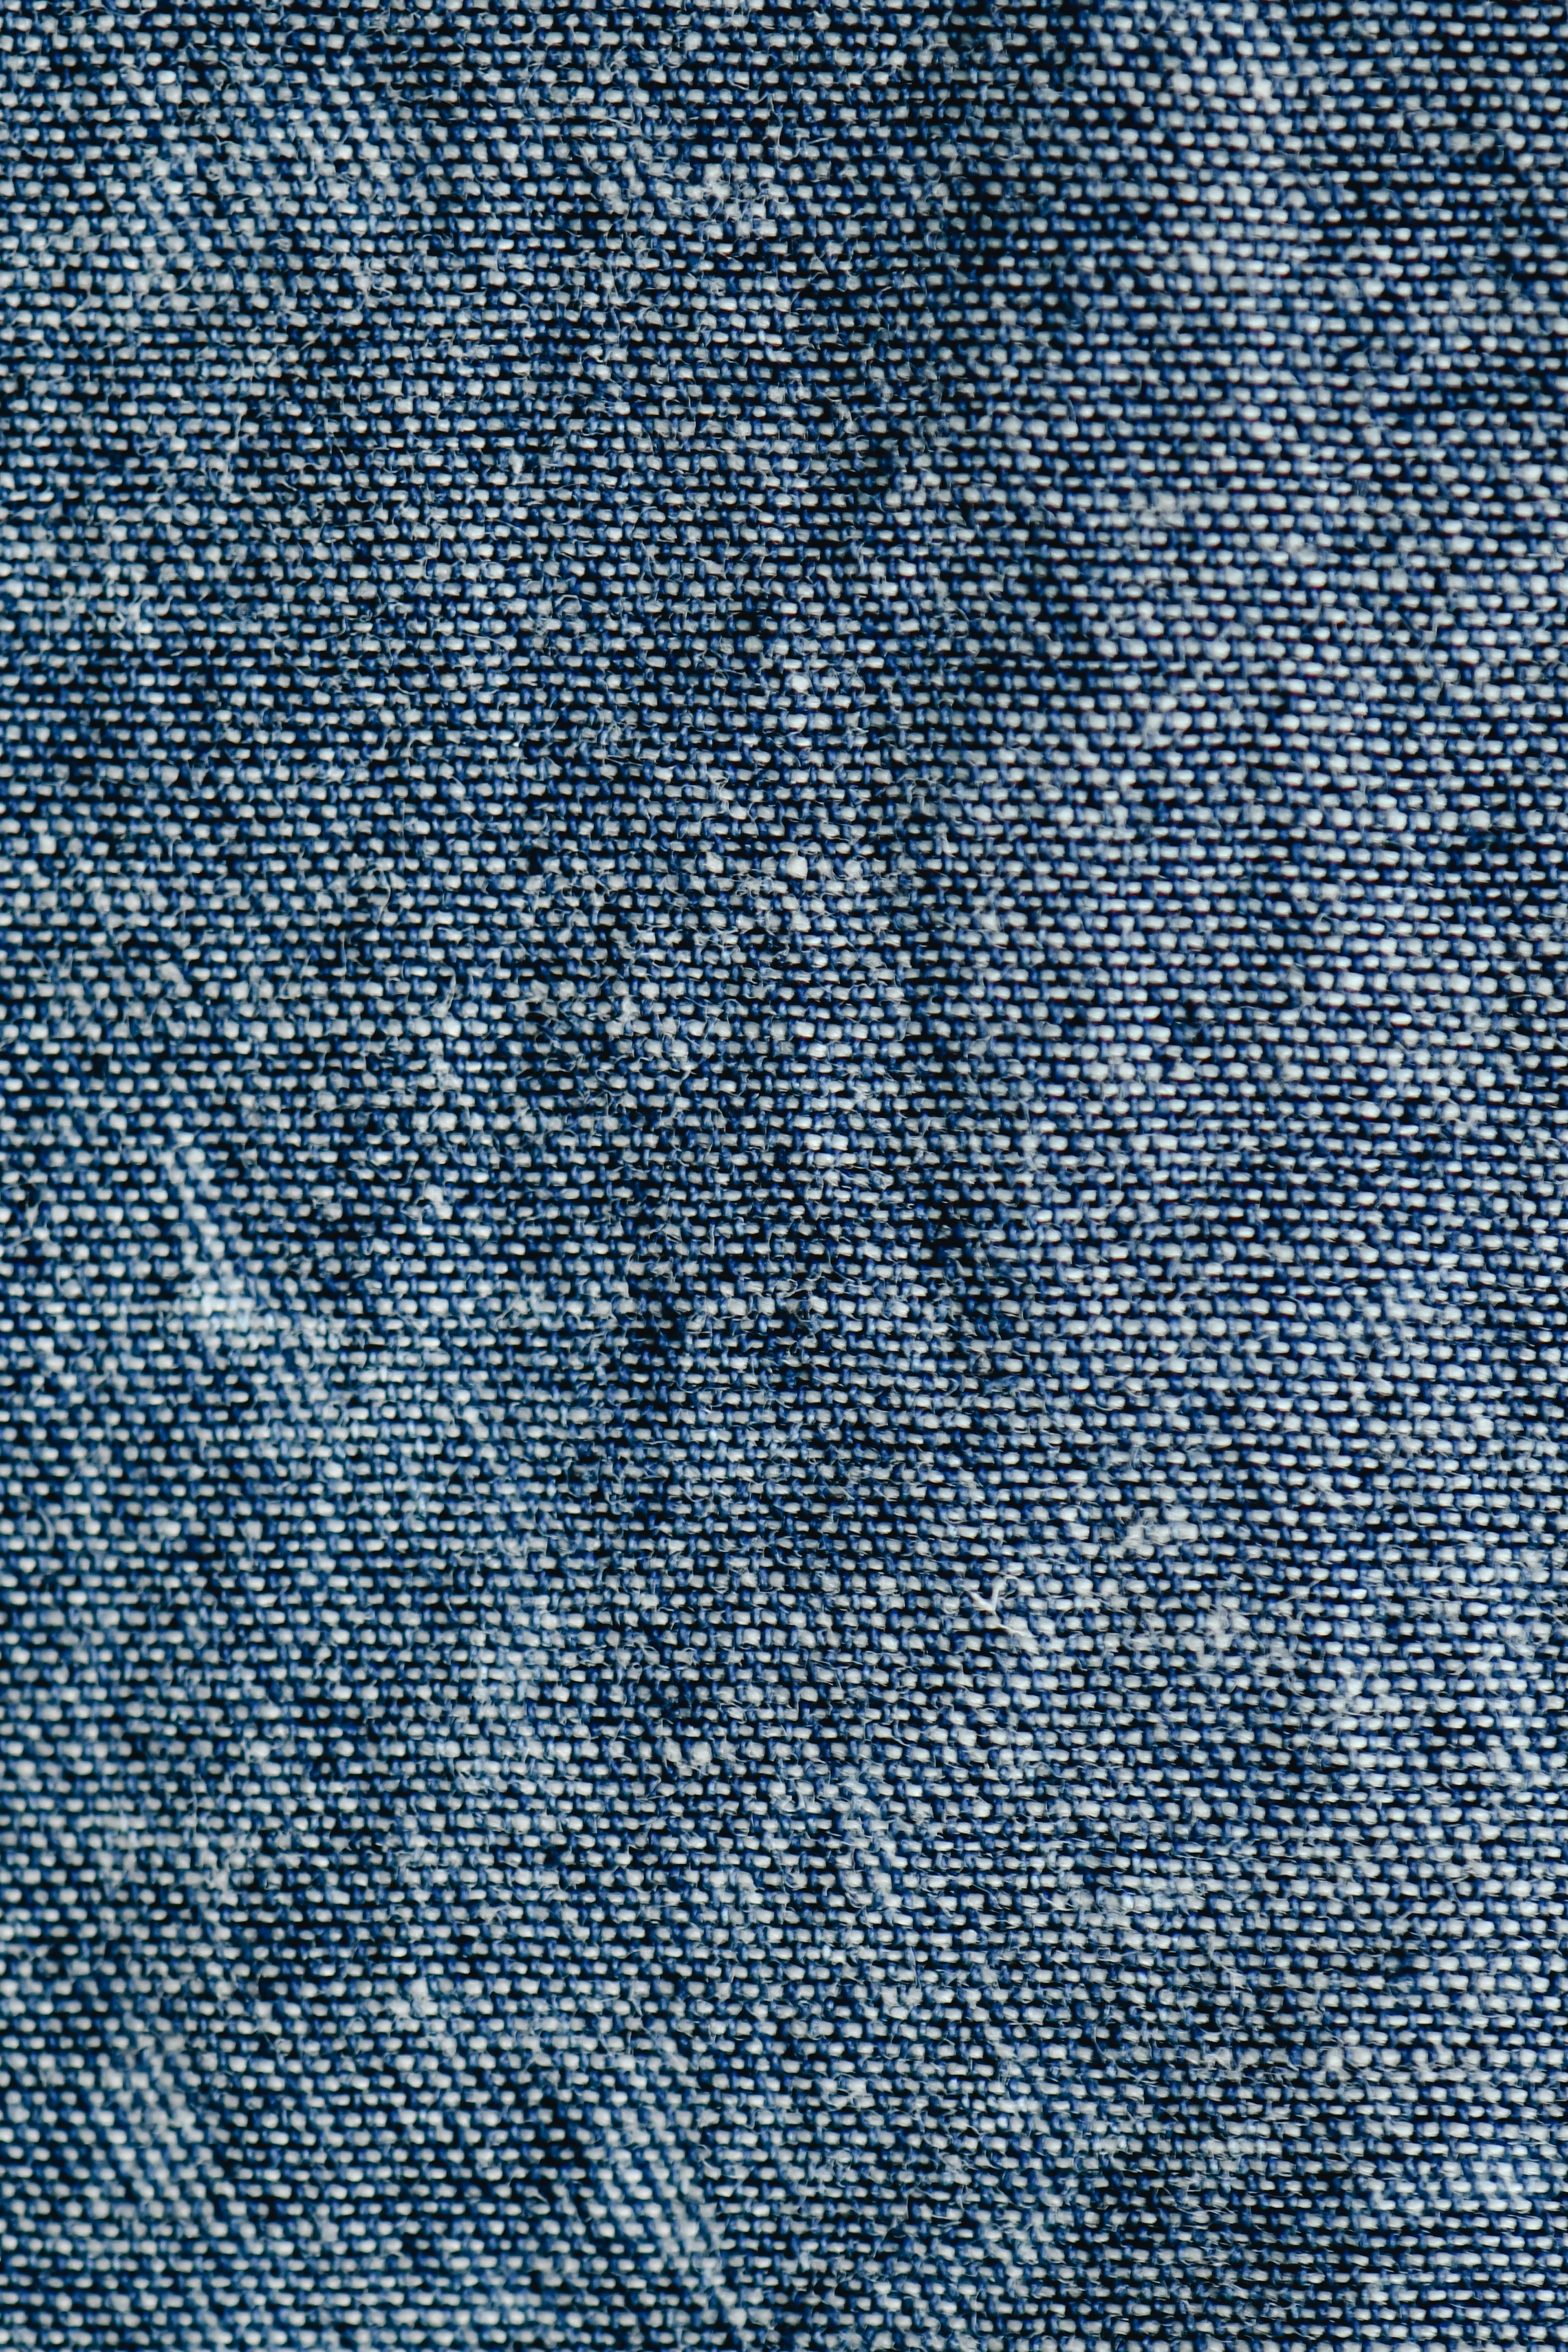 Download free photo of Denim cloth background,denim,cloth,background,blue  denim - from needpix.com